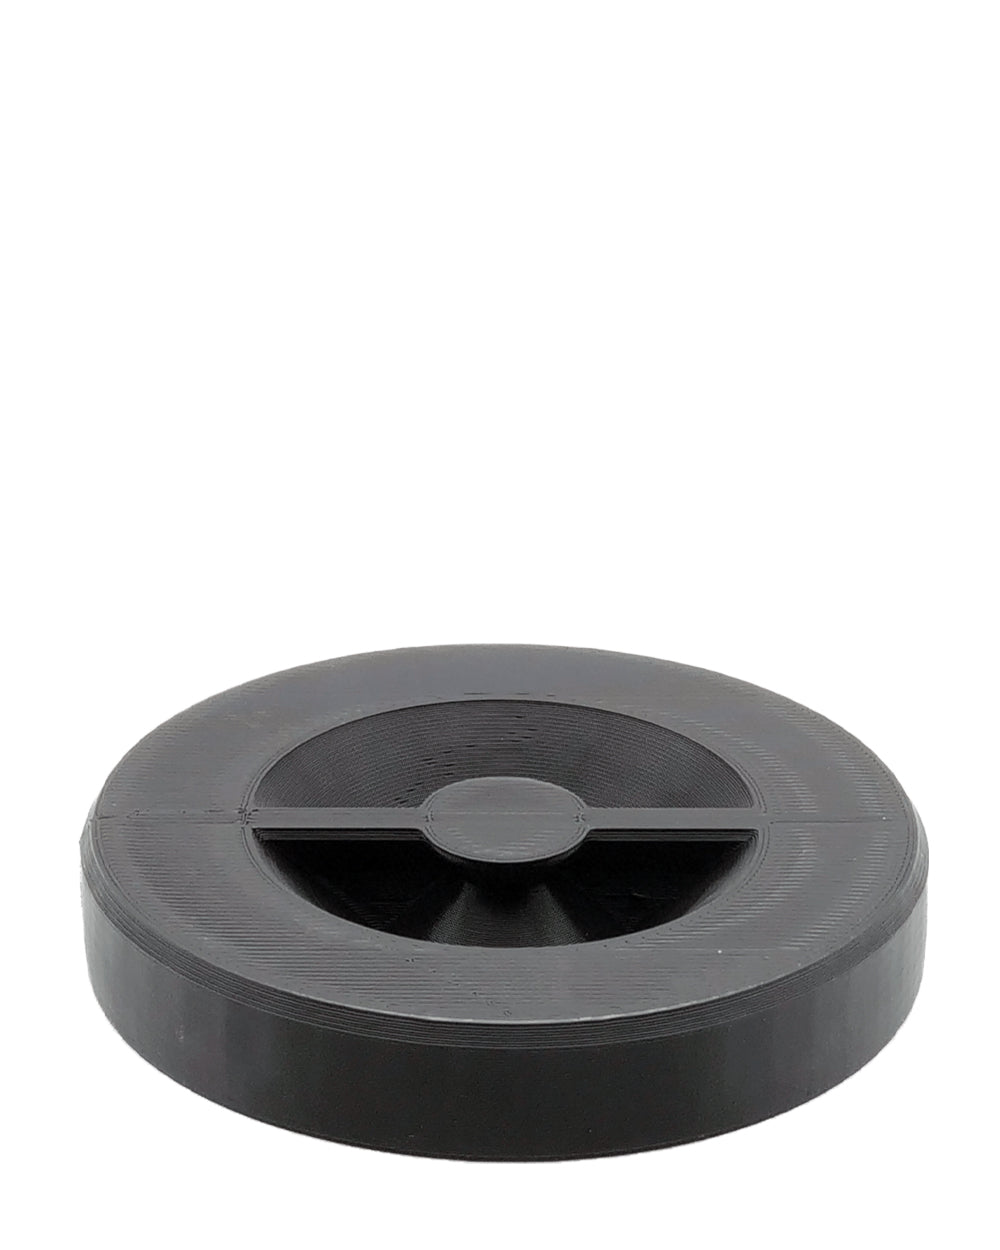 HUMBOLDT | Black Pre-Rolled Cones Filling Machine Starter Kit 98mm Slim | Fill 121 Cones Per Run - 4